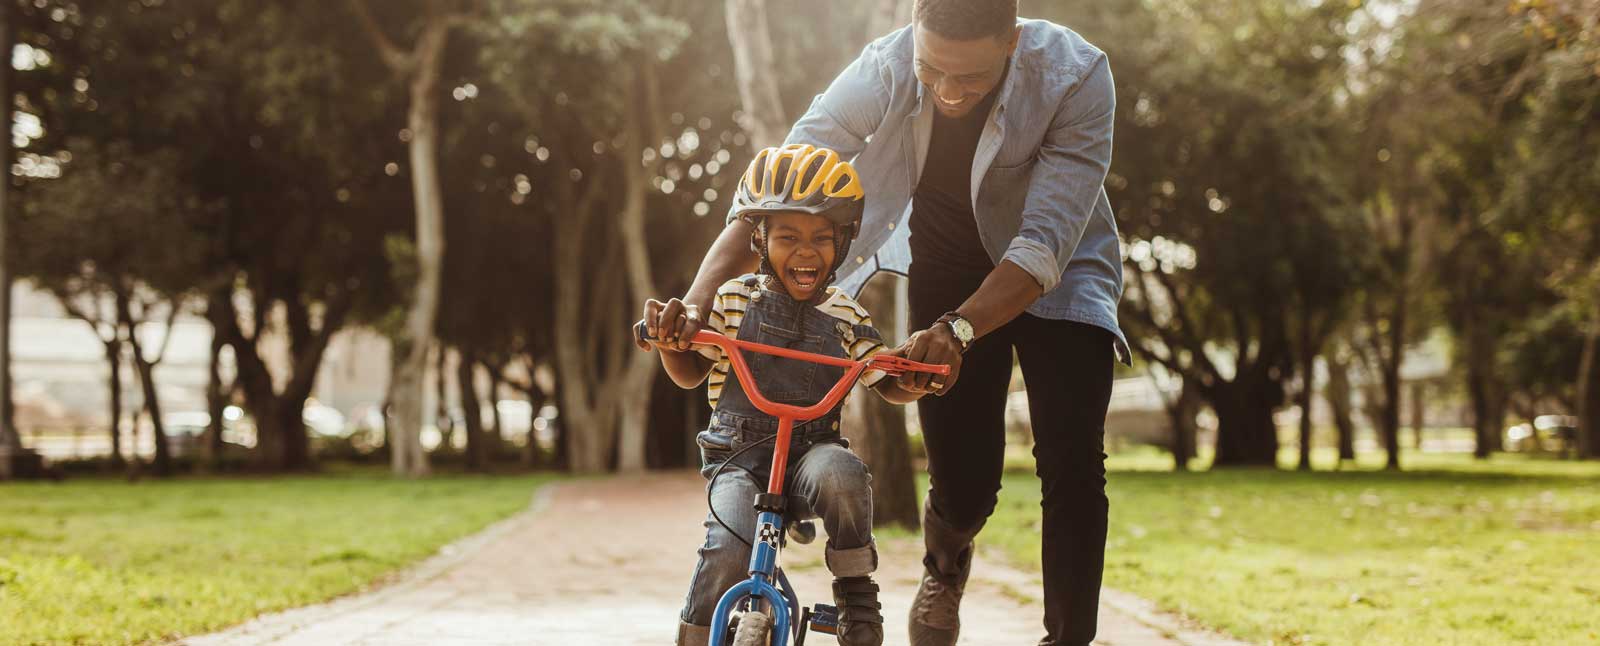 Dental Insurance - Dad teaching son how to ride a bike